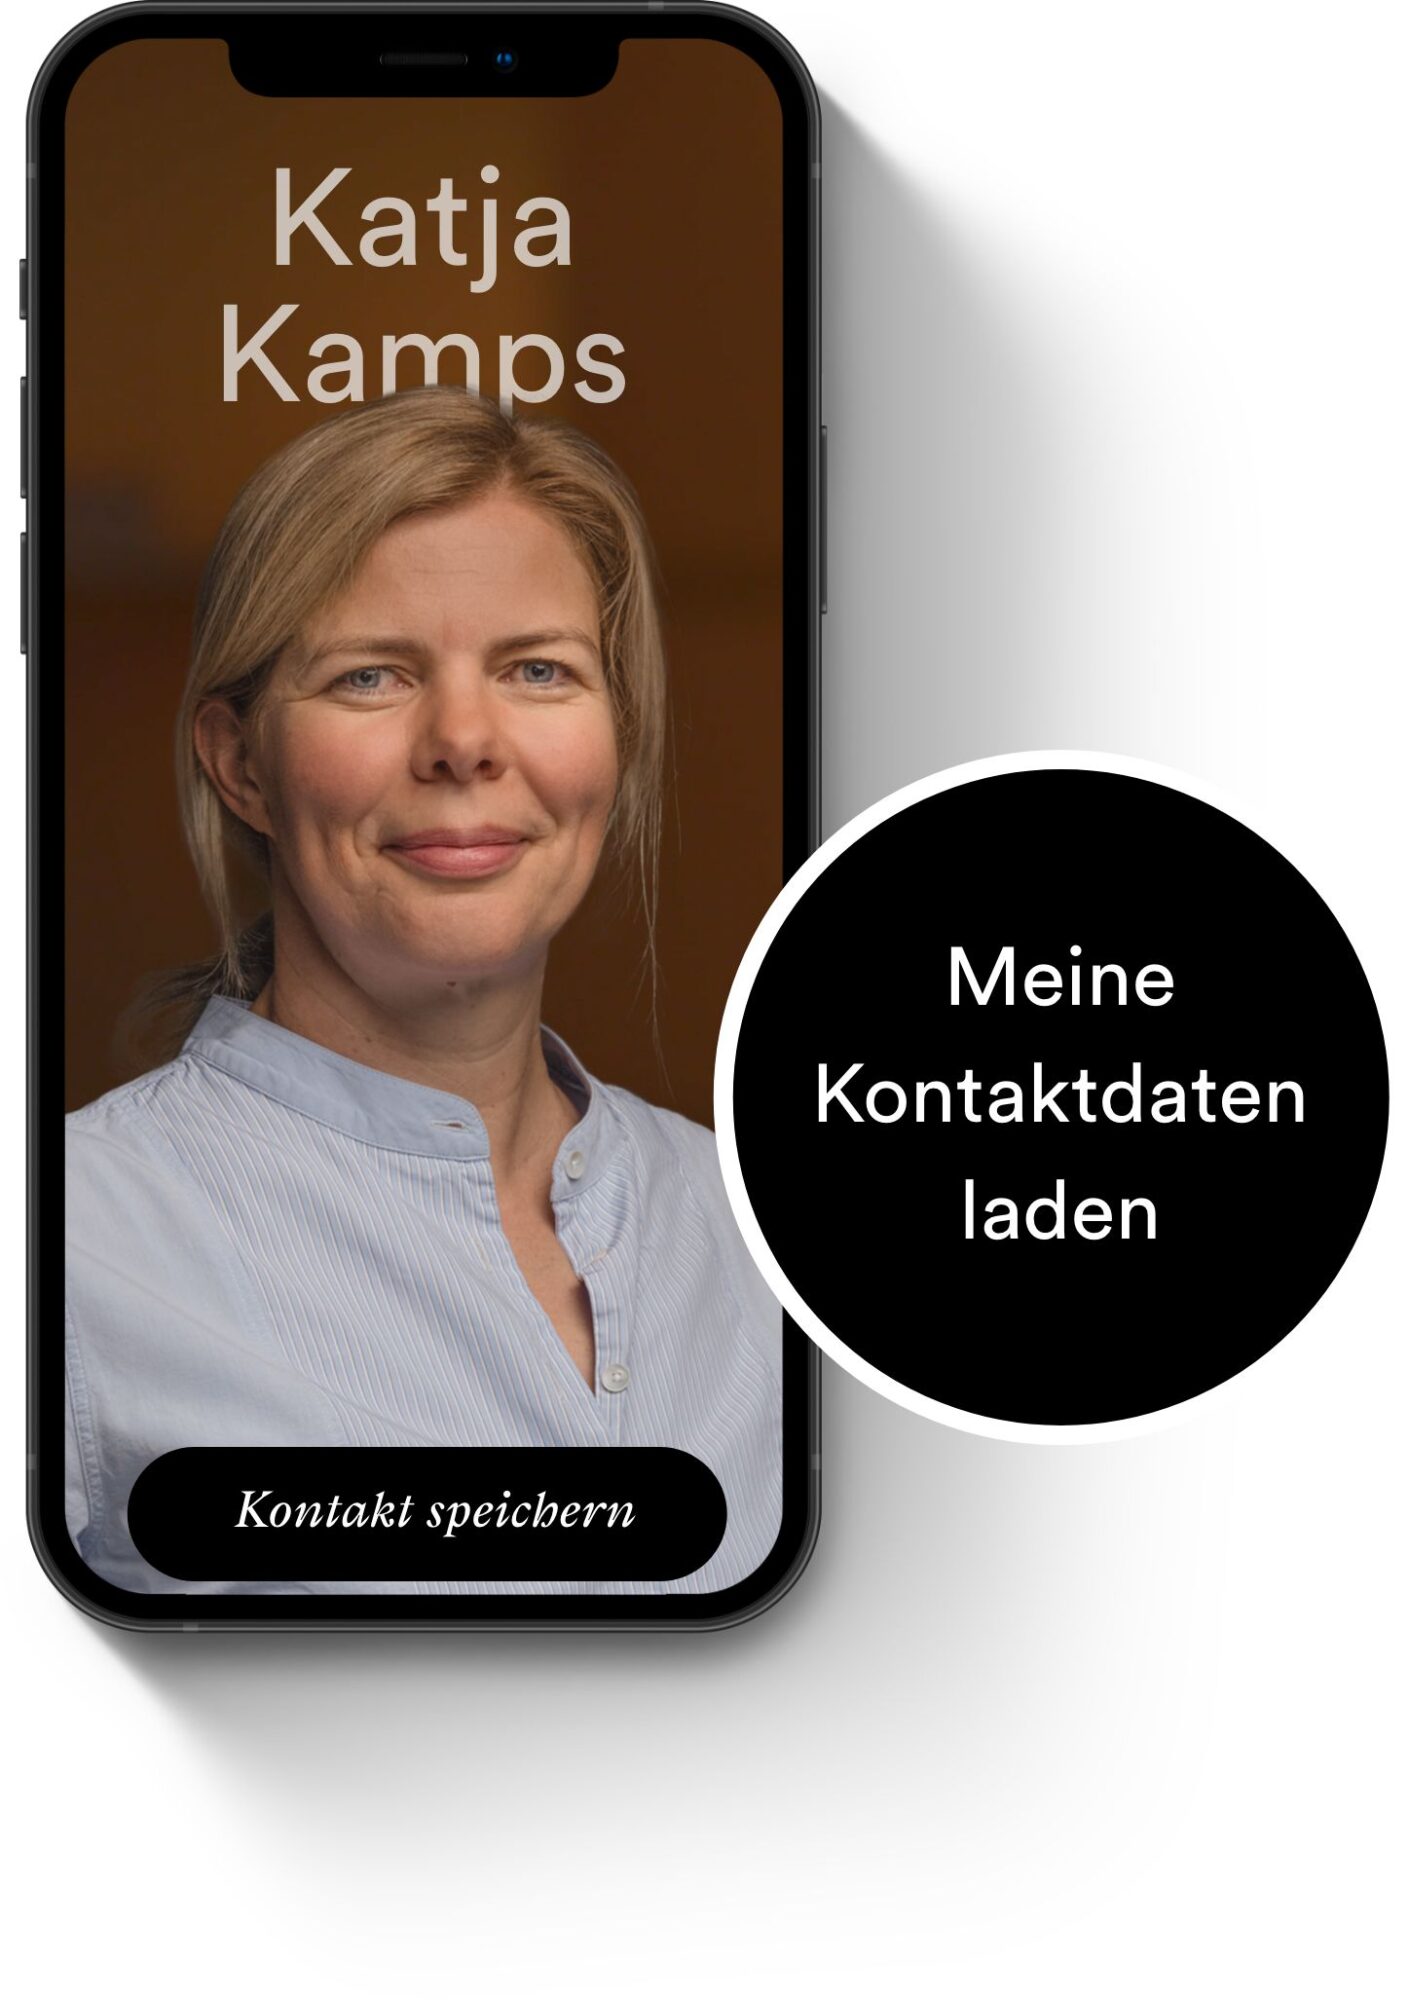 Katja Kamps, Team Quant